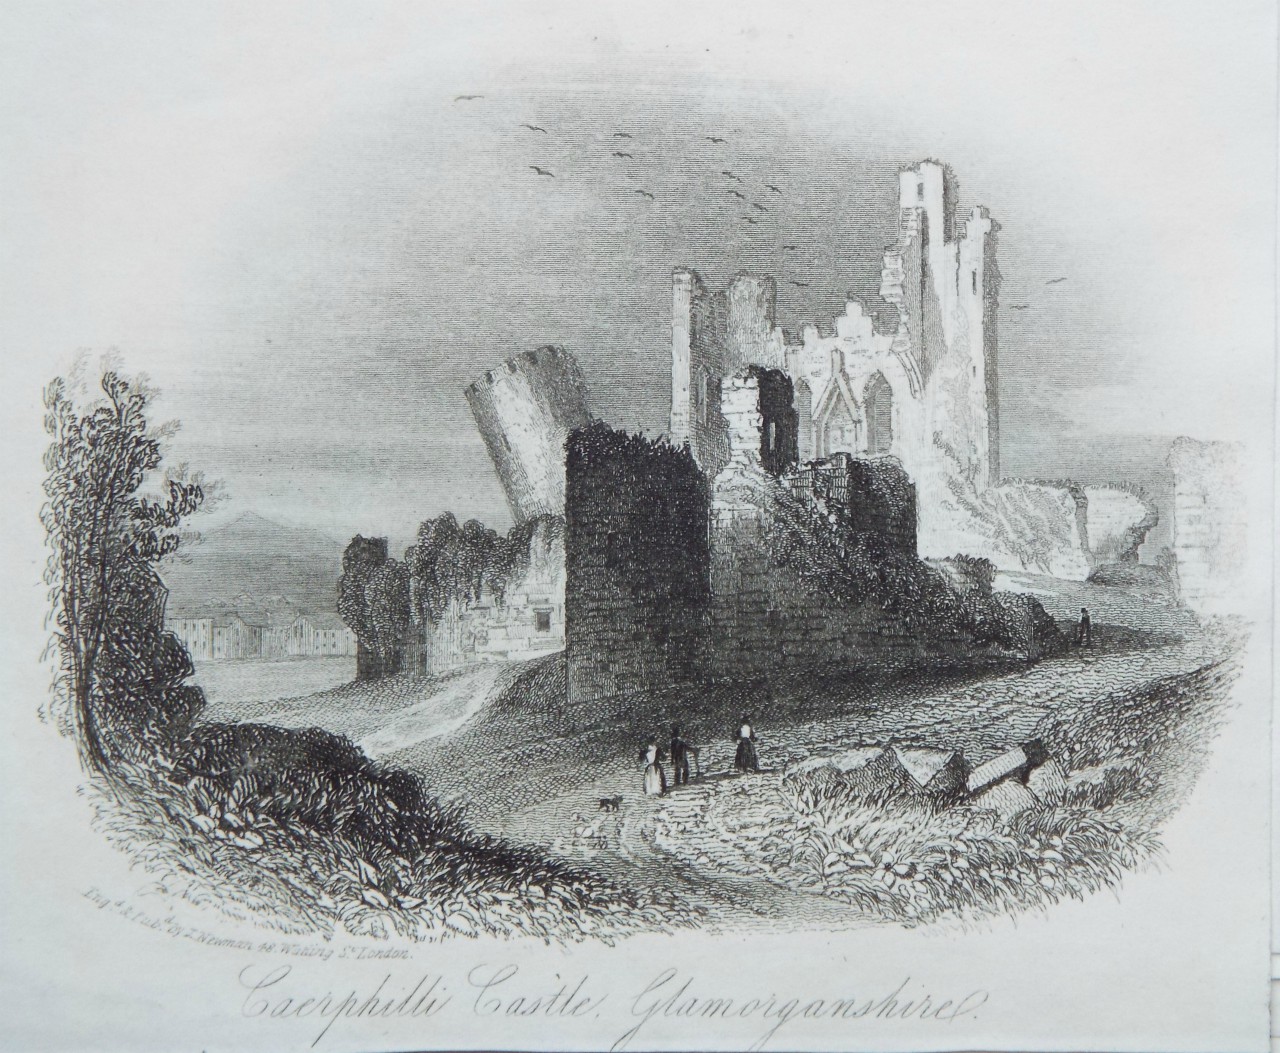 Steel Vignette - Caerphilli Castle, Glamorganshire. - J